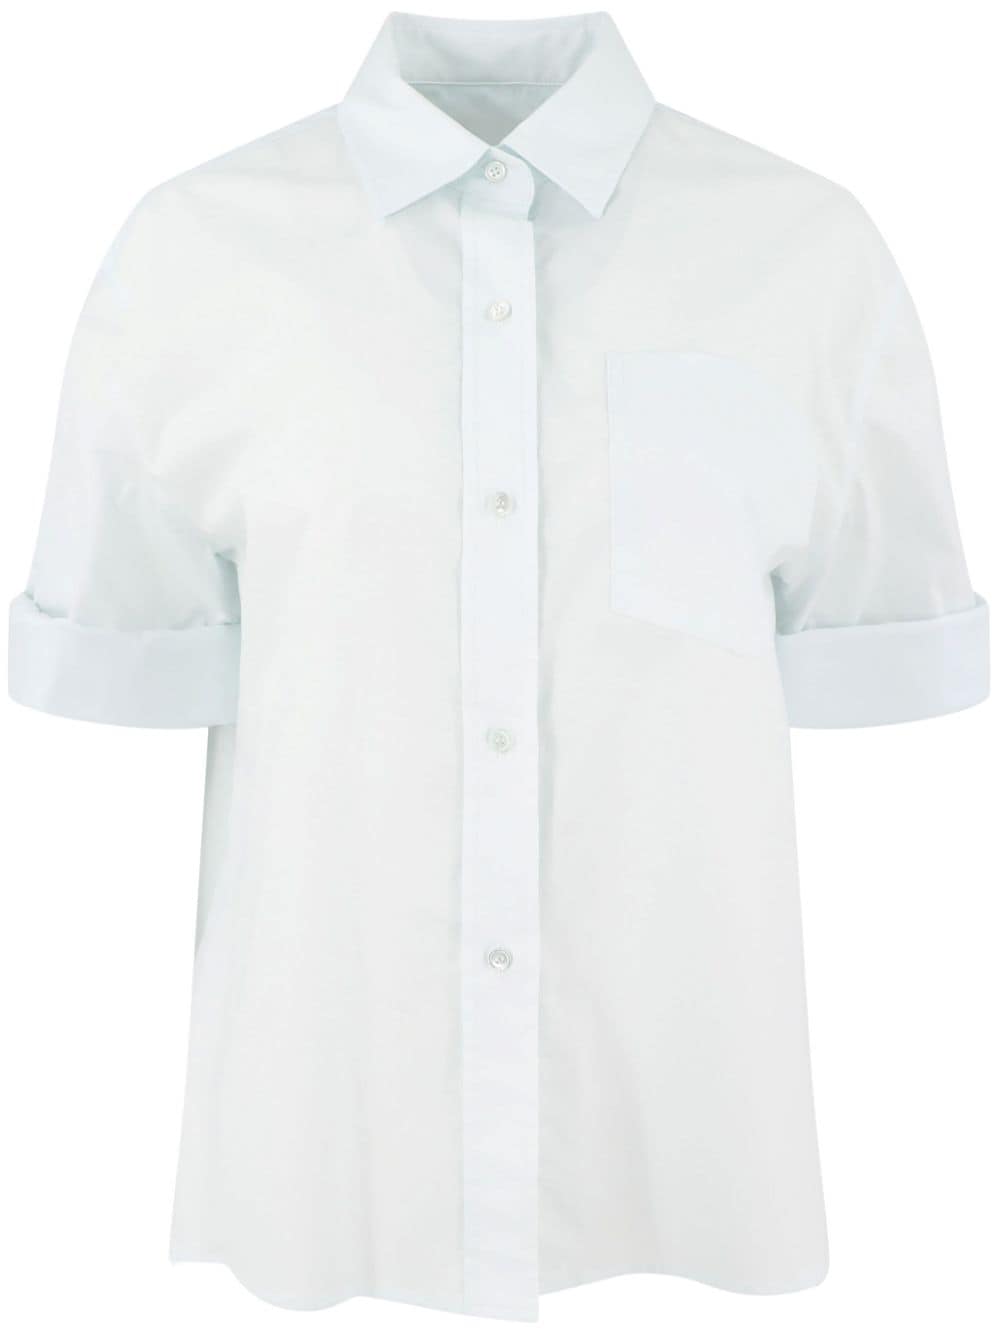 Twp Bad Habit Cotton Shirt In White